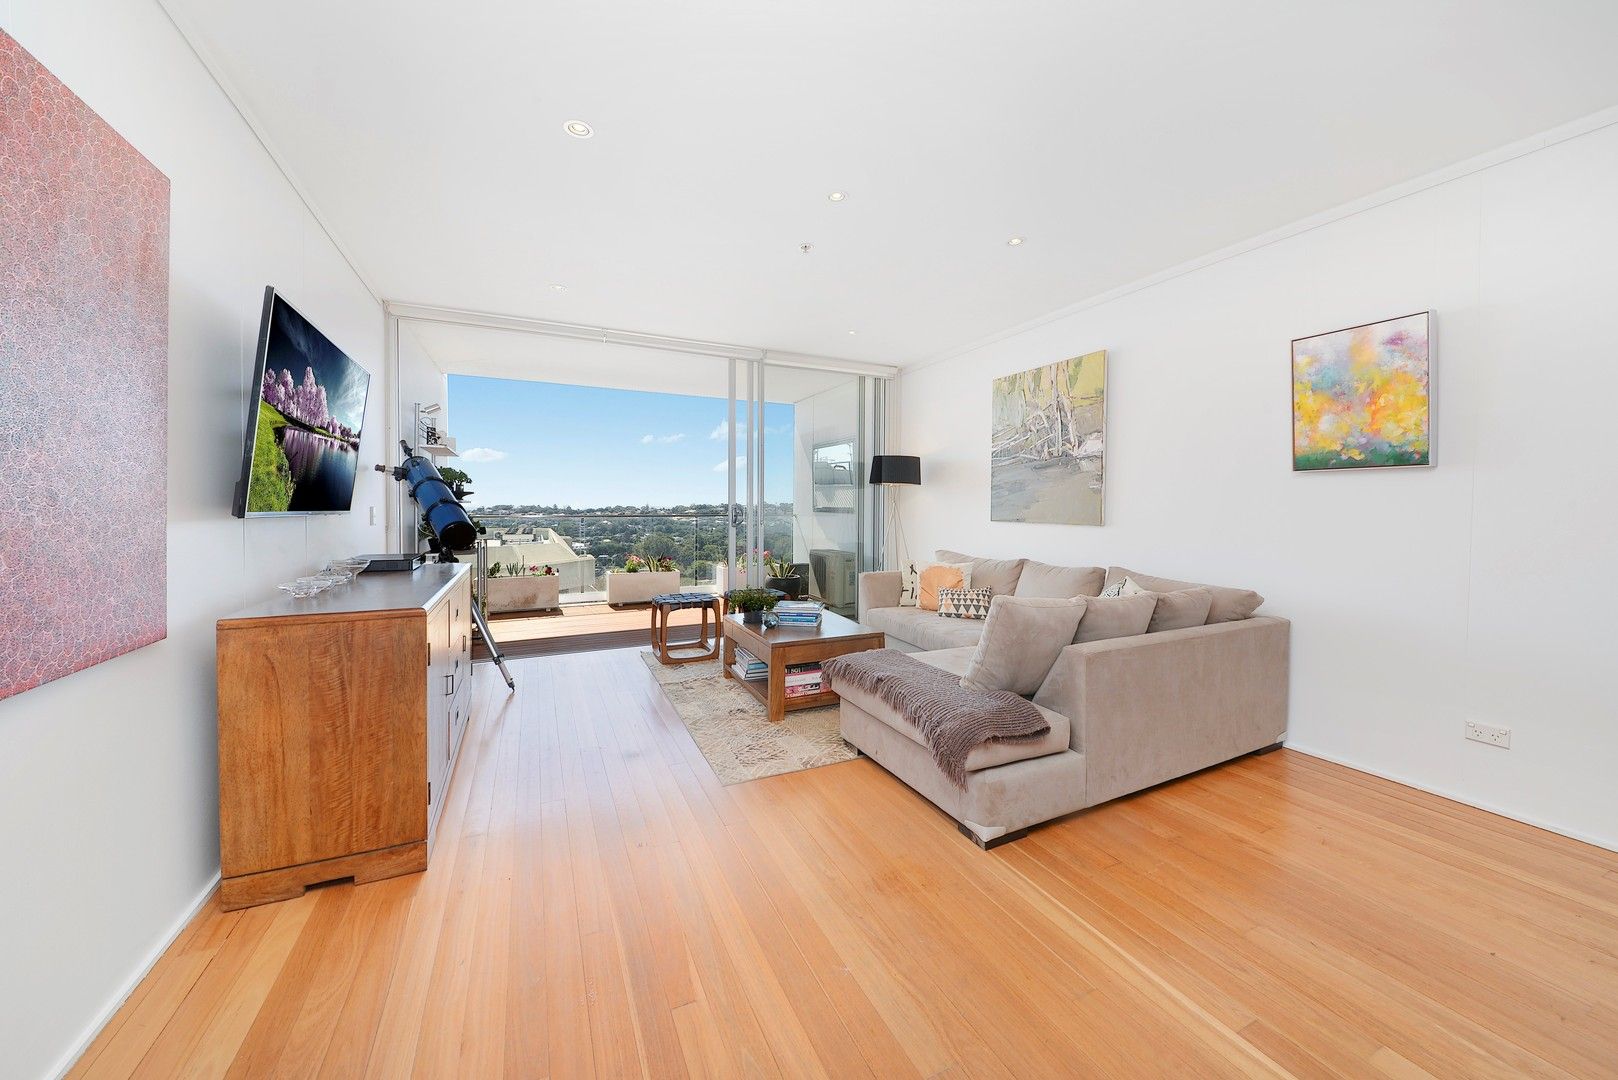 2 bedrooms Apartment / Unit / Flat in W805/310-330 Oxford Street BONDI JUNCTION NSW, 2022